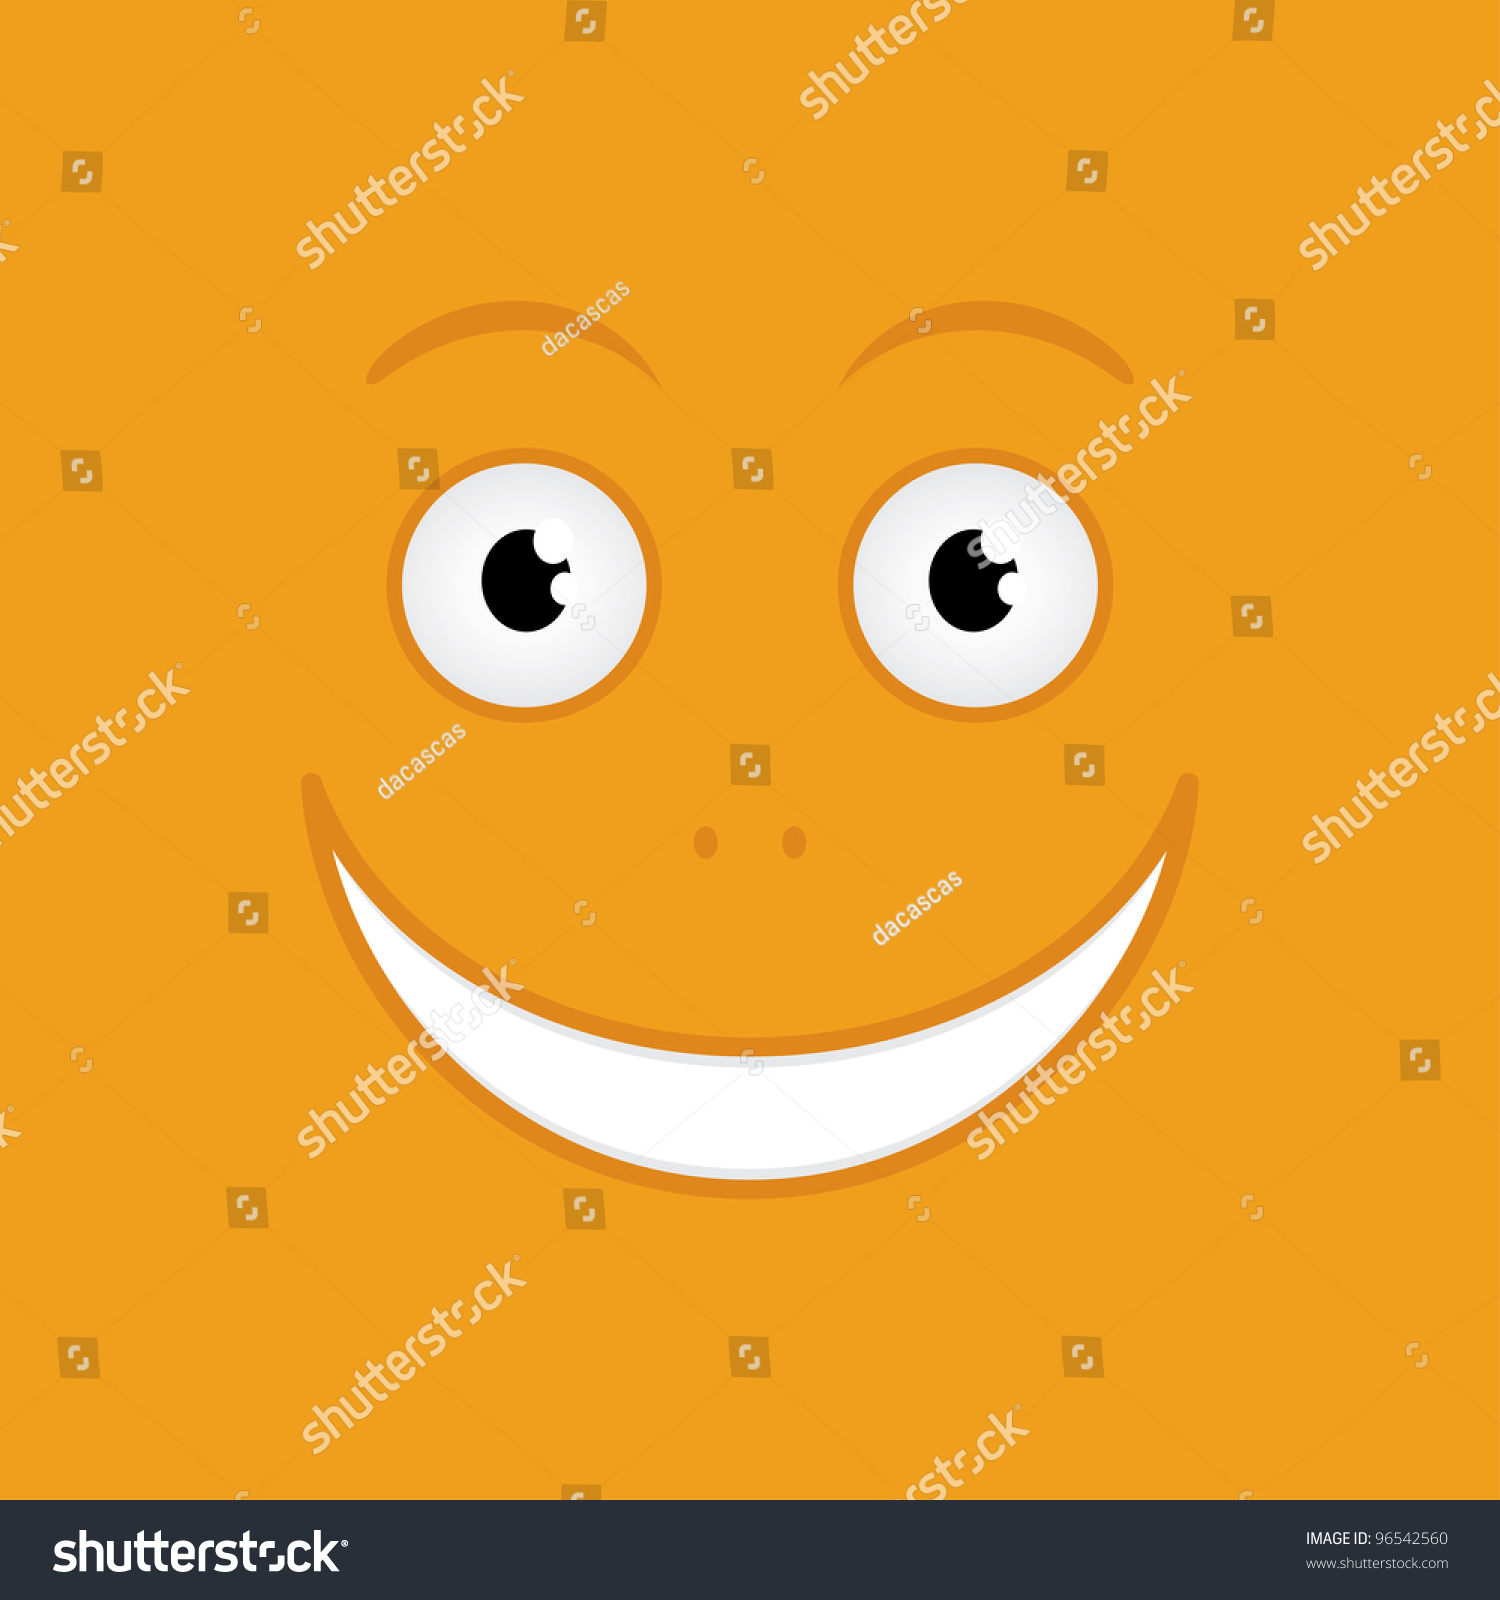 Vector Illustration Smiling Cartoon Face Stock Vector 96542560